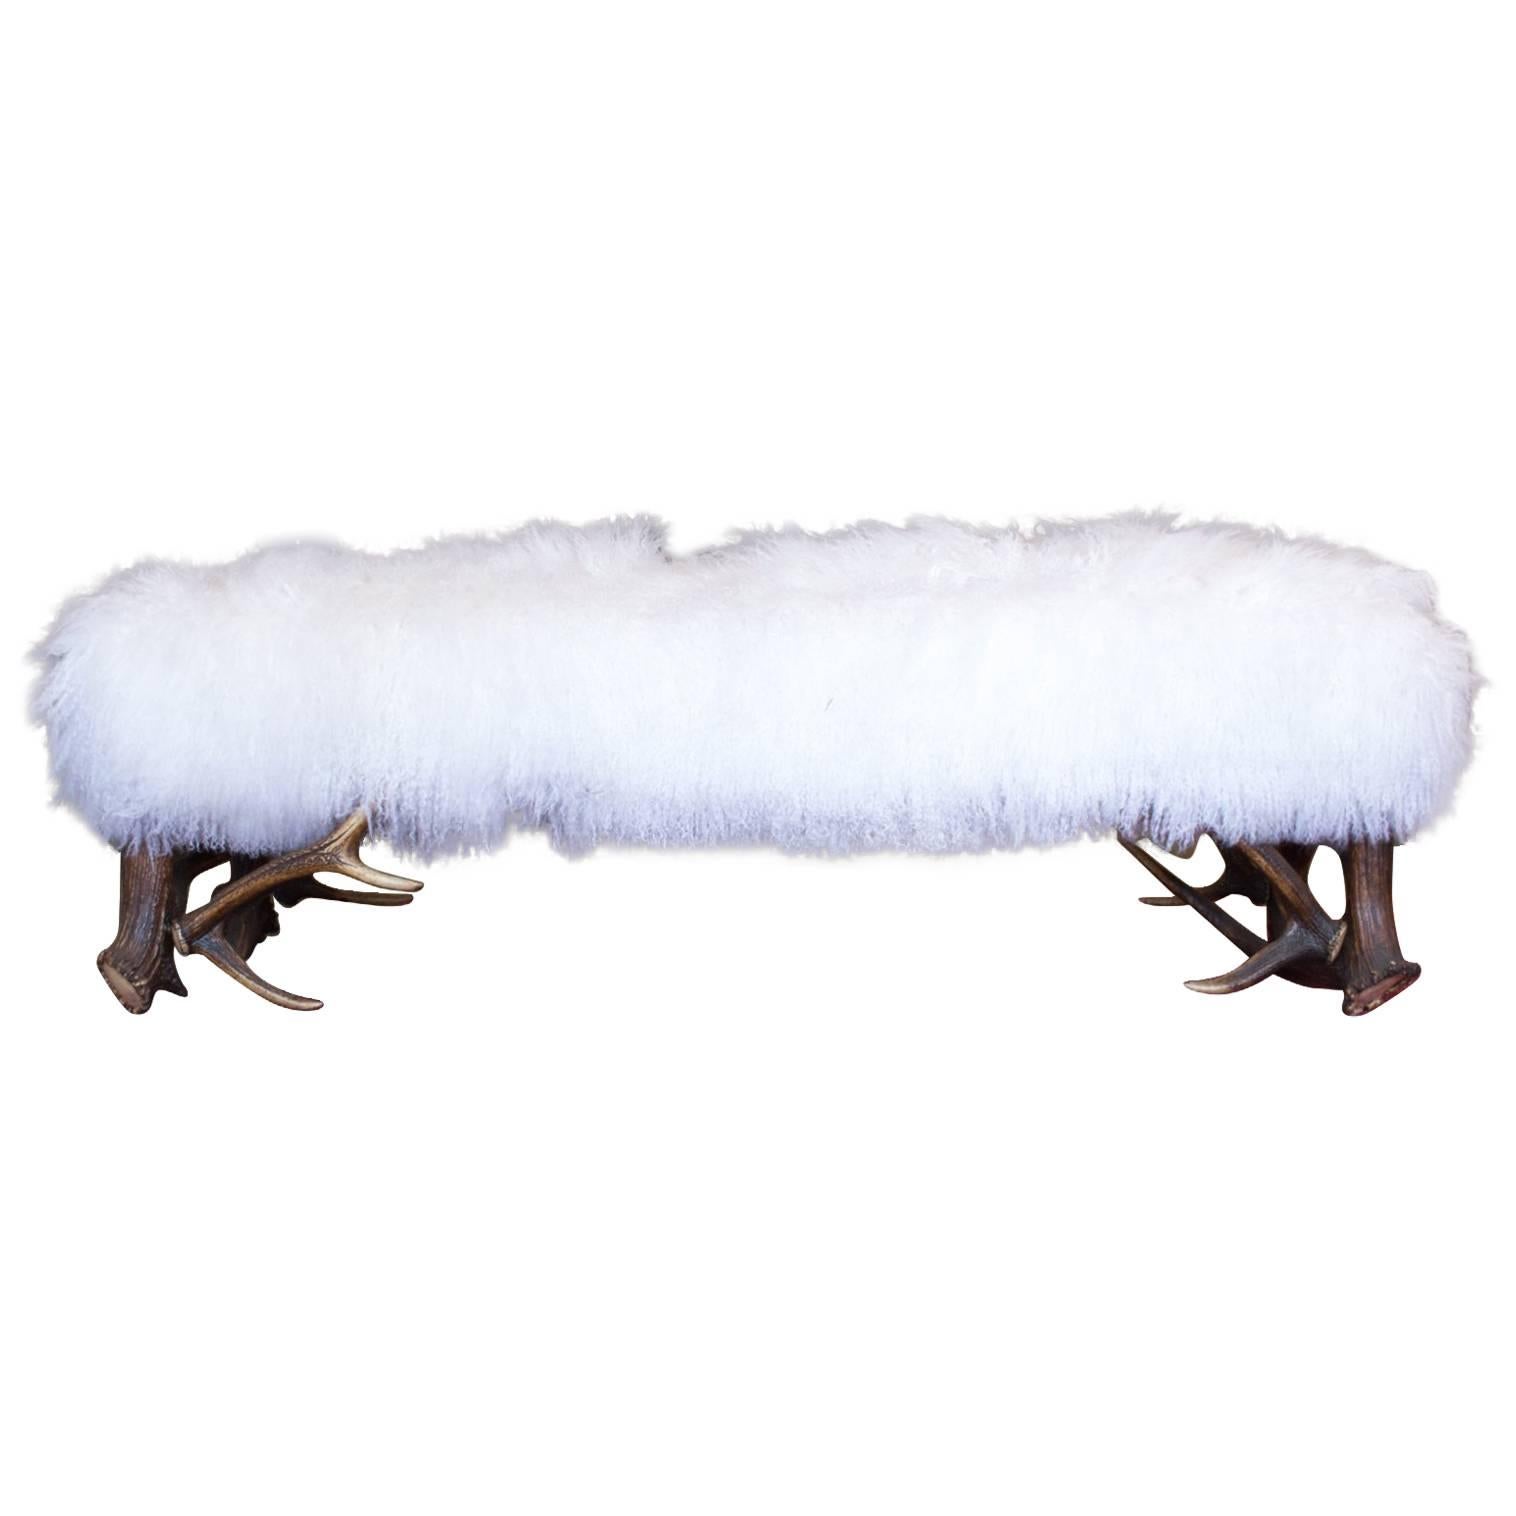 Habsburg Red Stag Antler Bench with White Tibetan Lamb Fur Seat